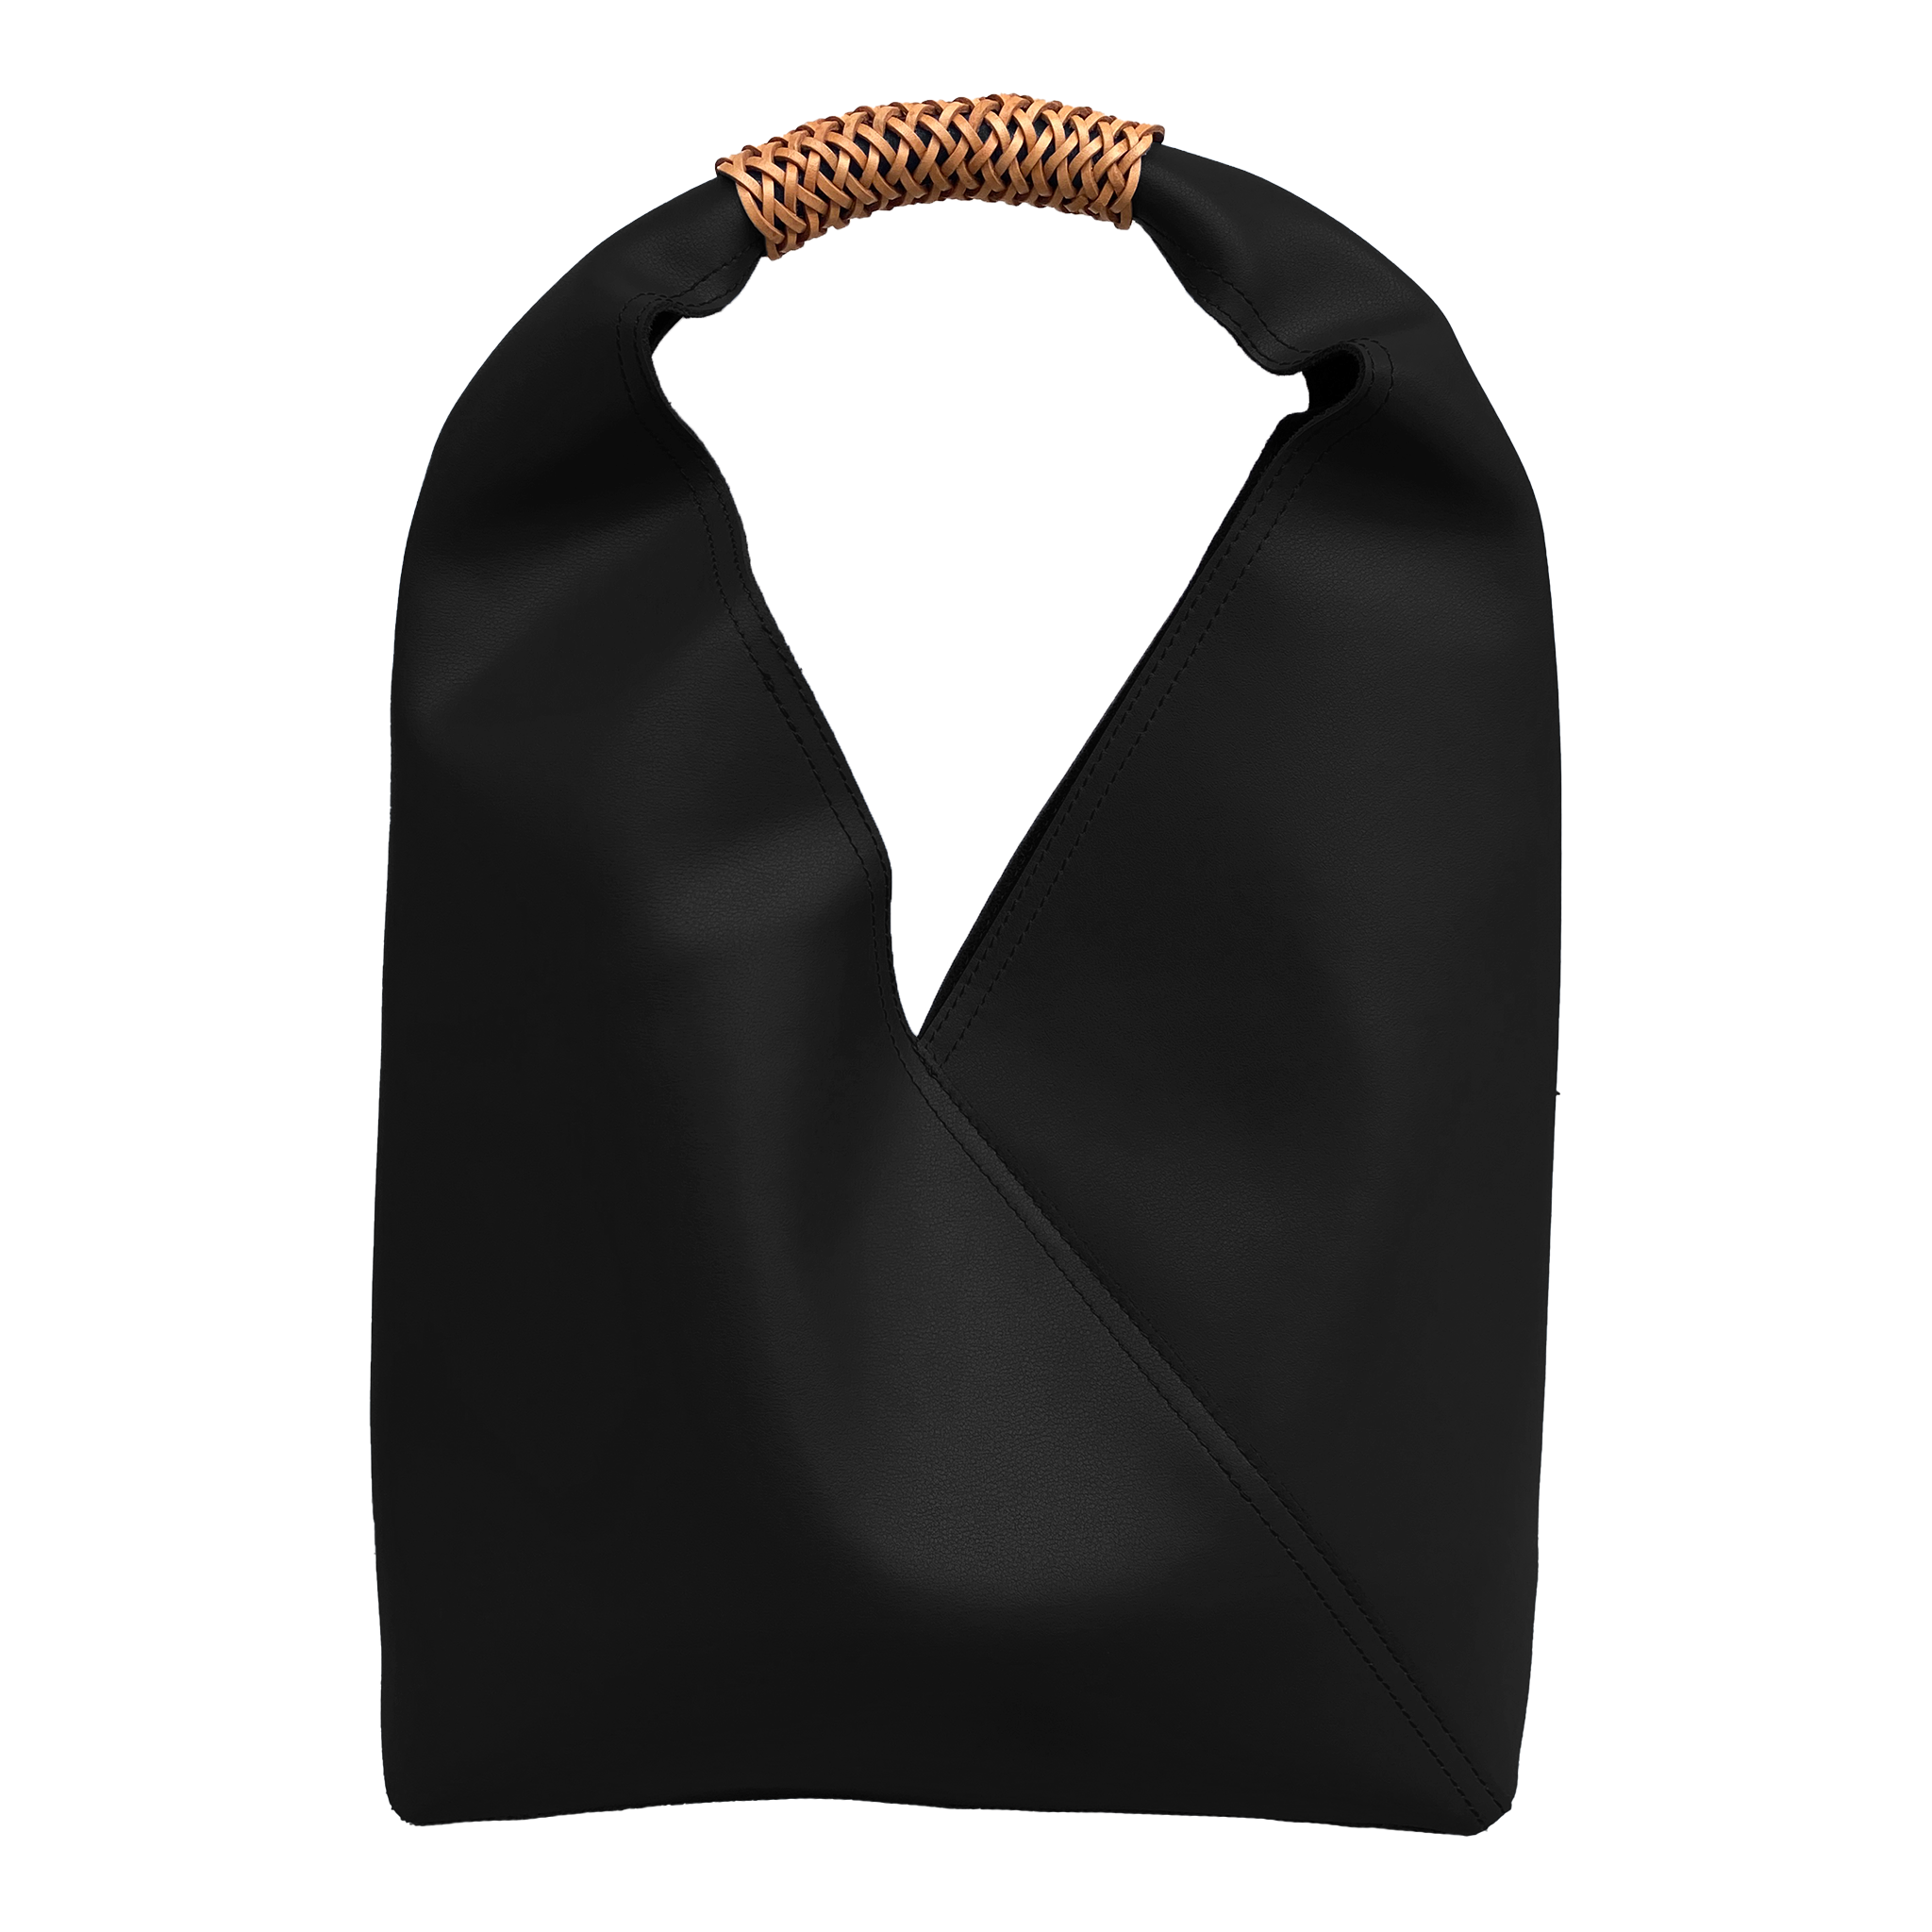 Leather Hobo Bag - Black